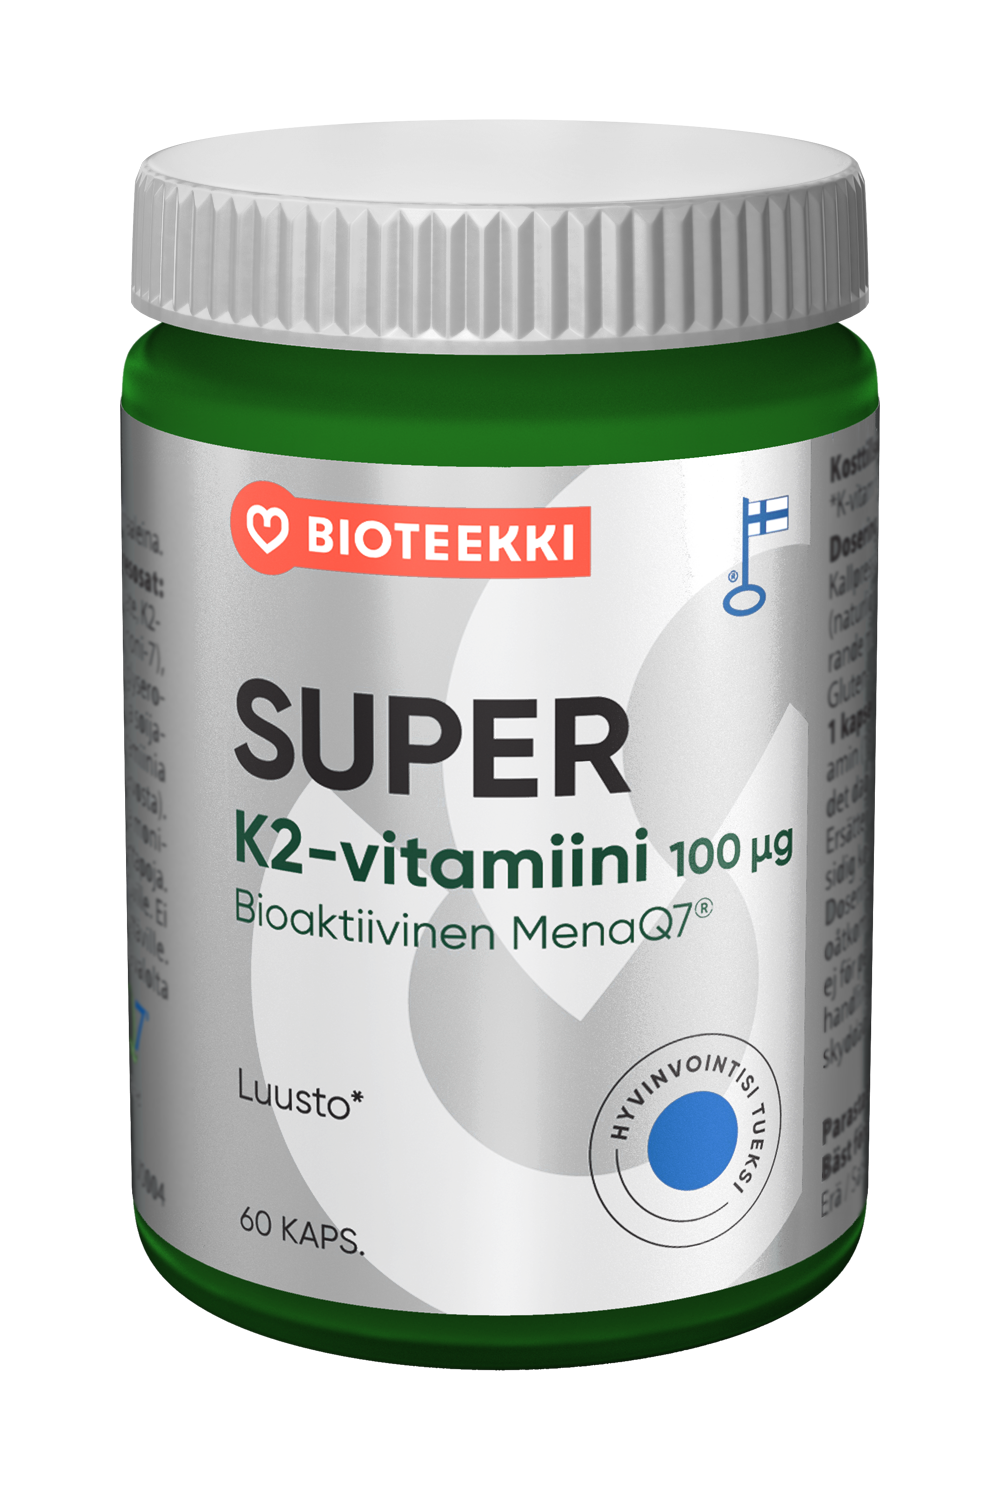 Super K2-vitamiini